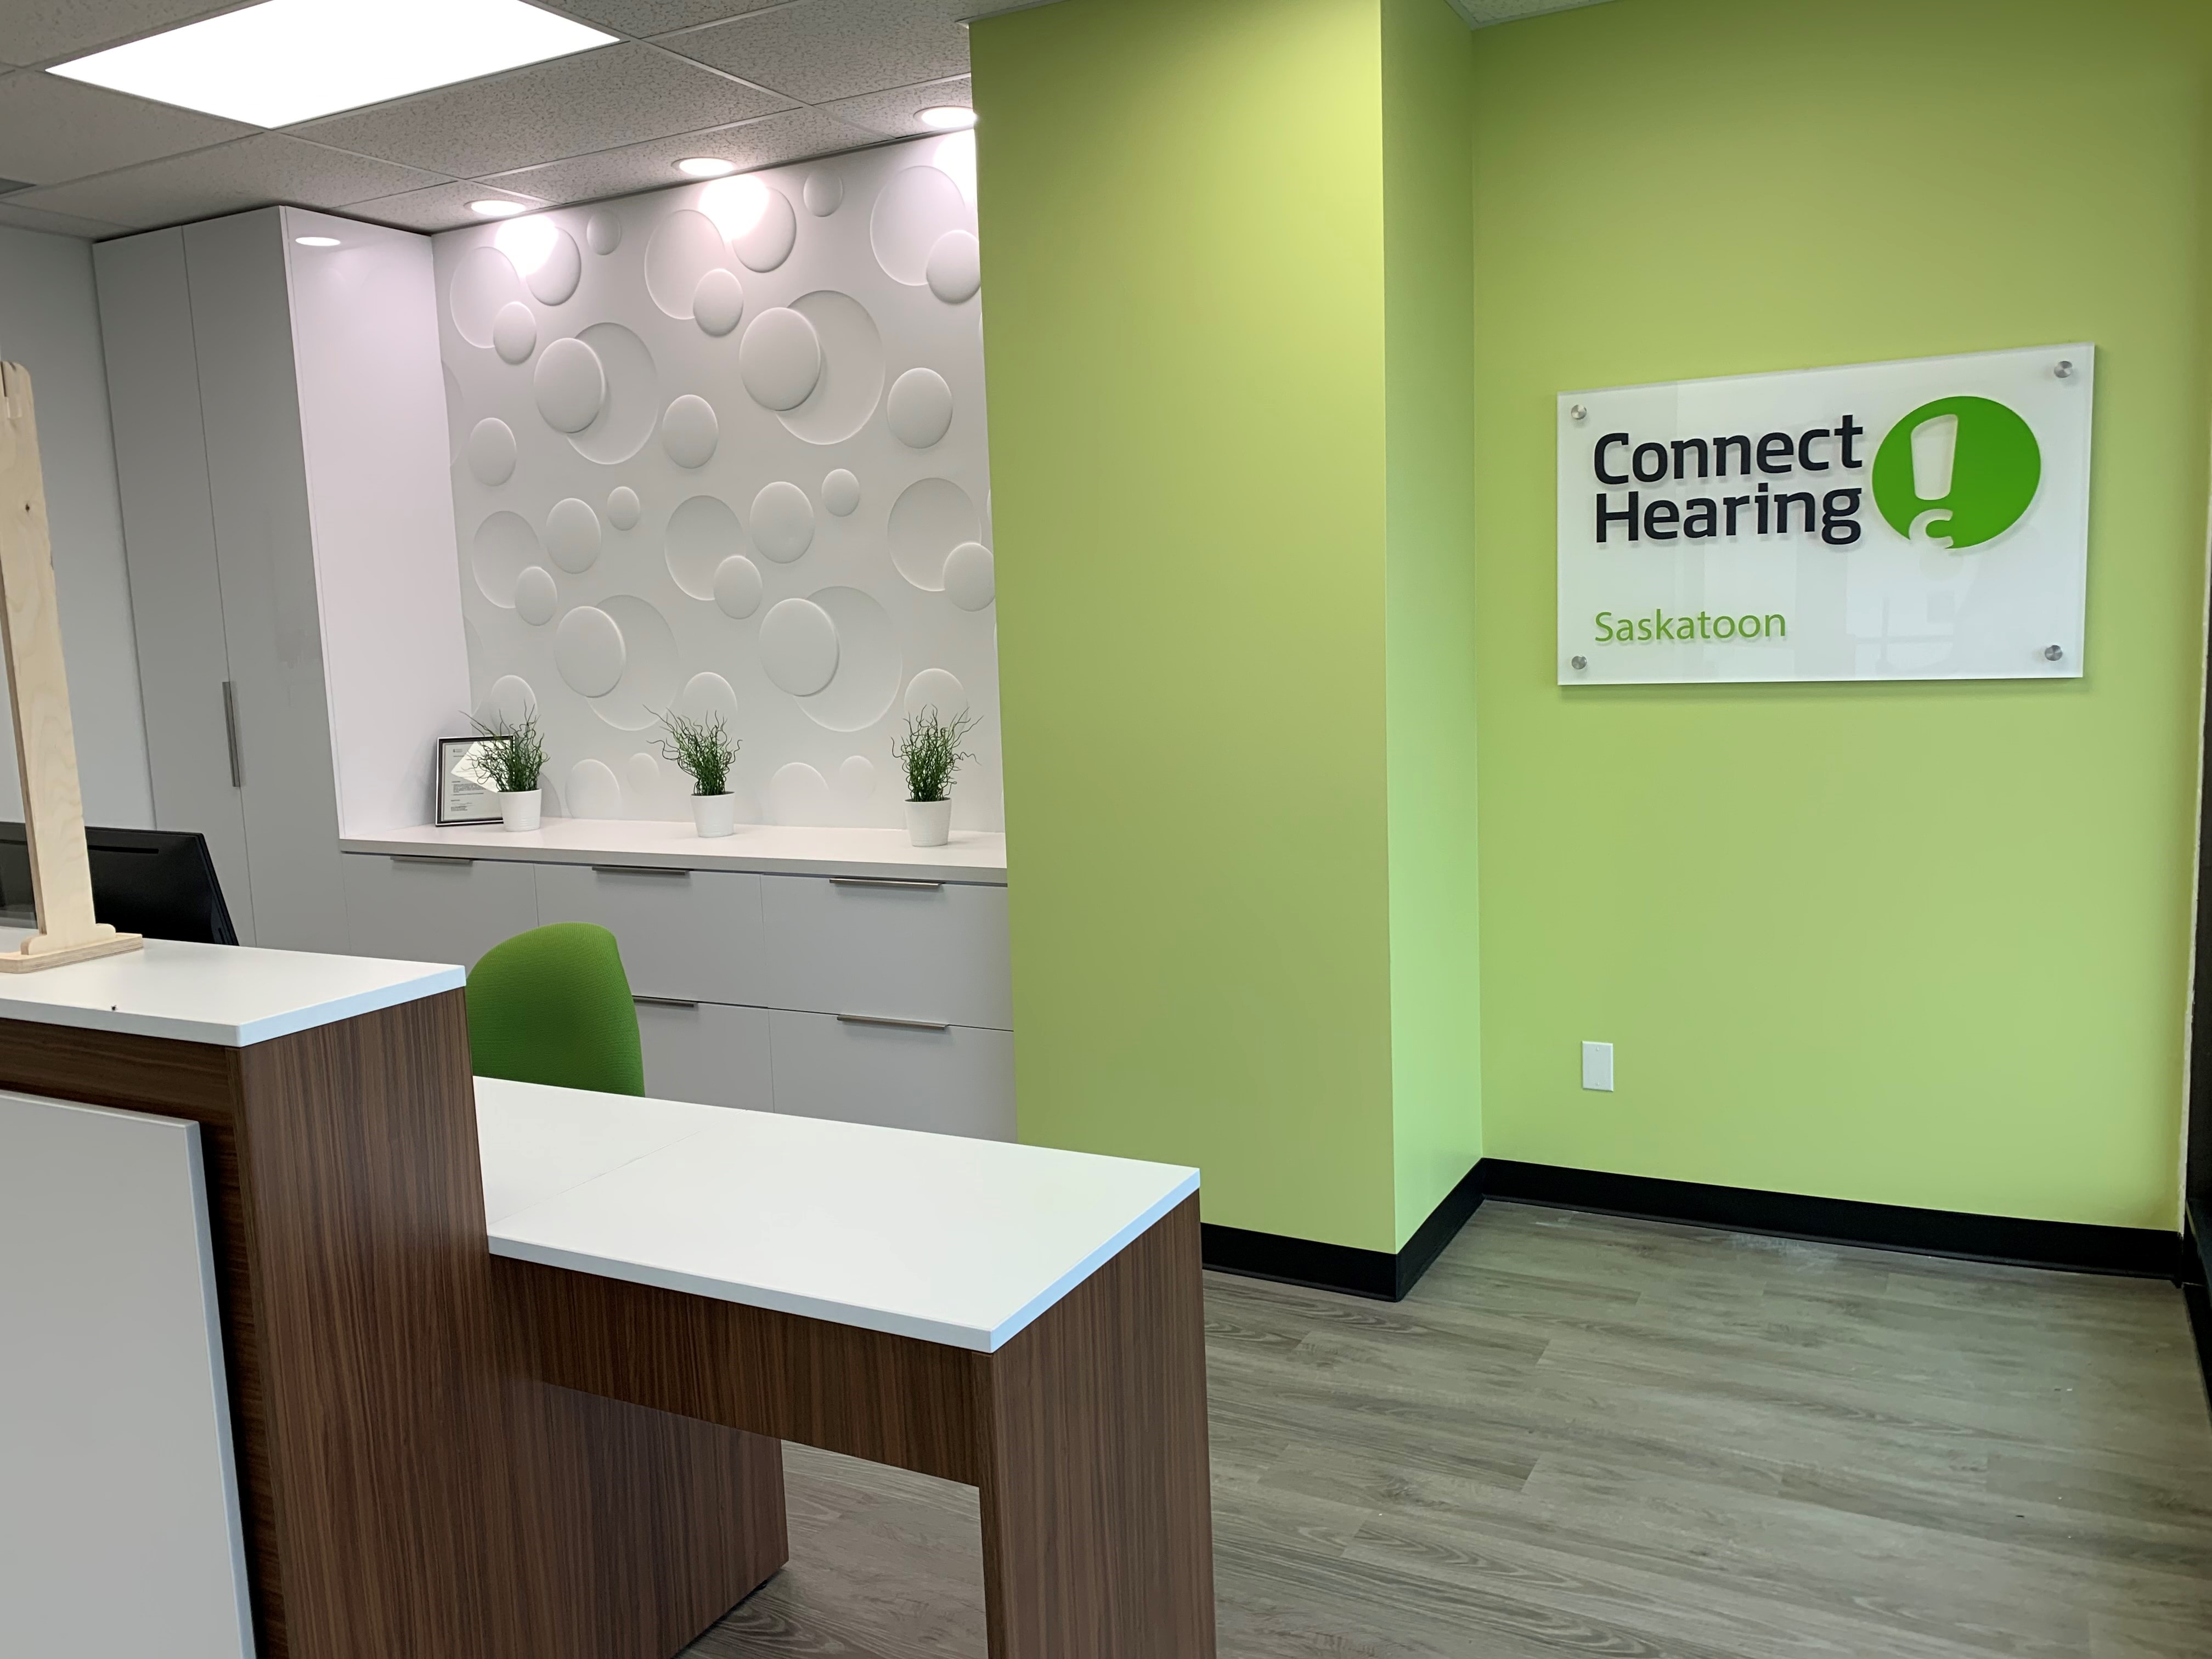 Connect Hearing Saskatoon (306)651-1606